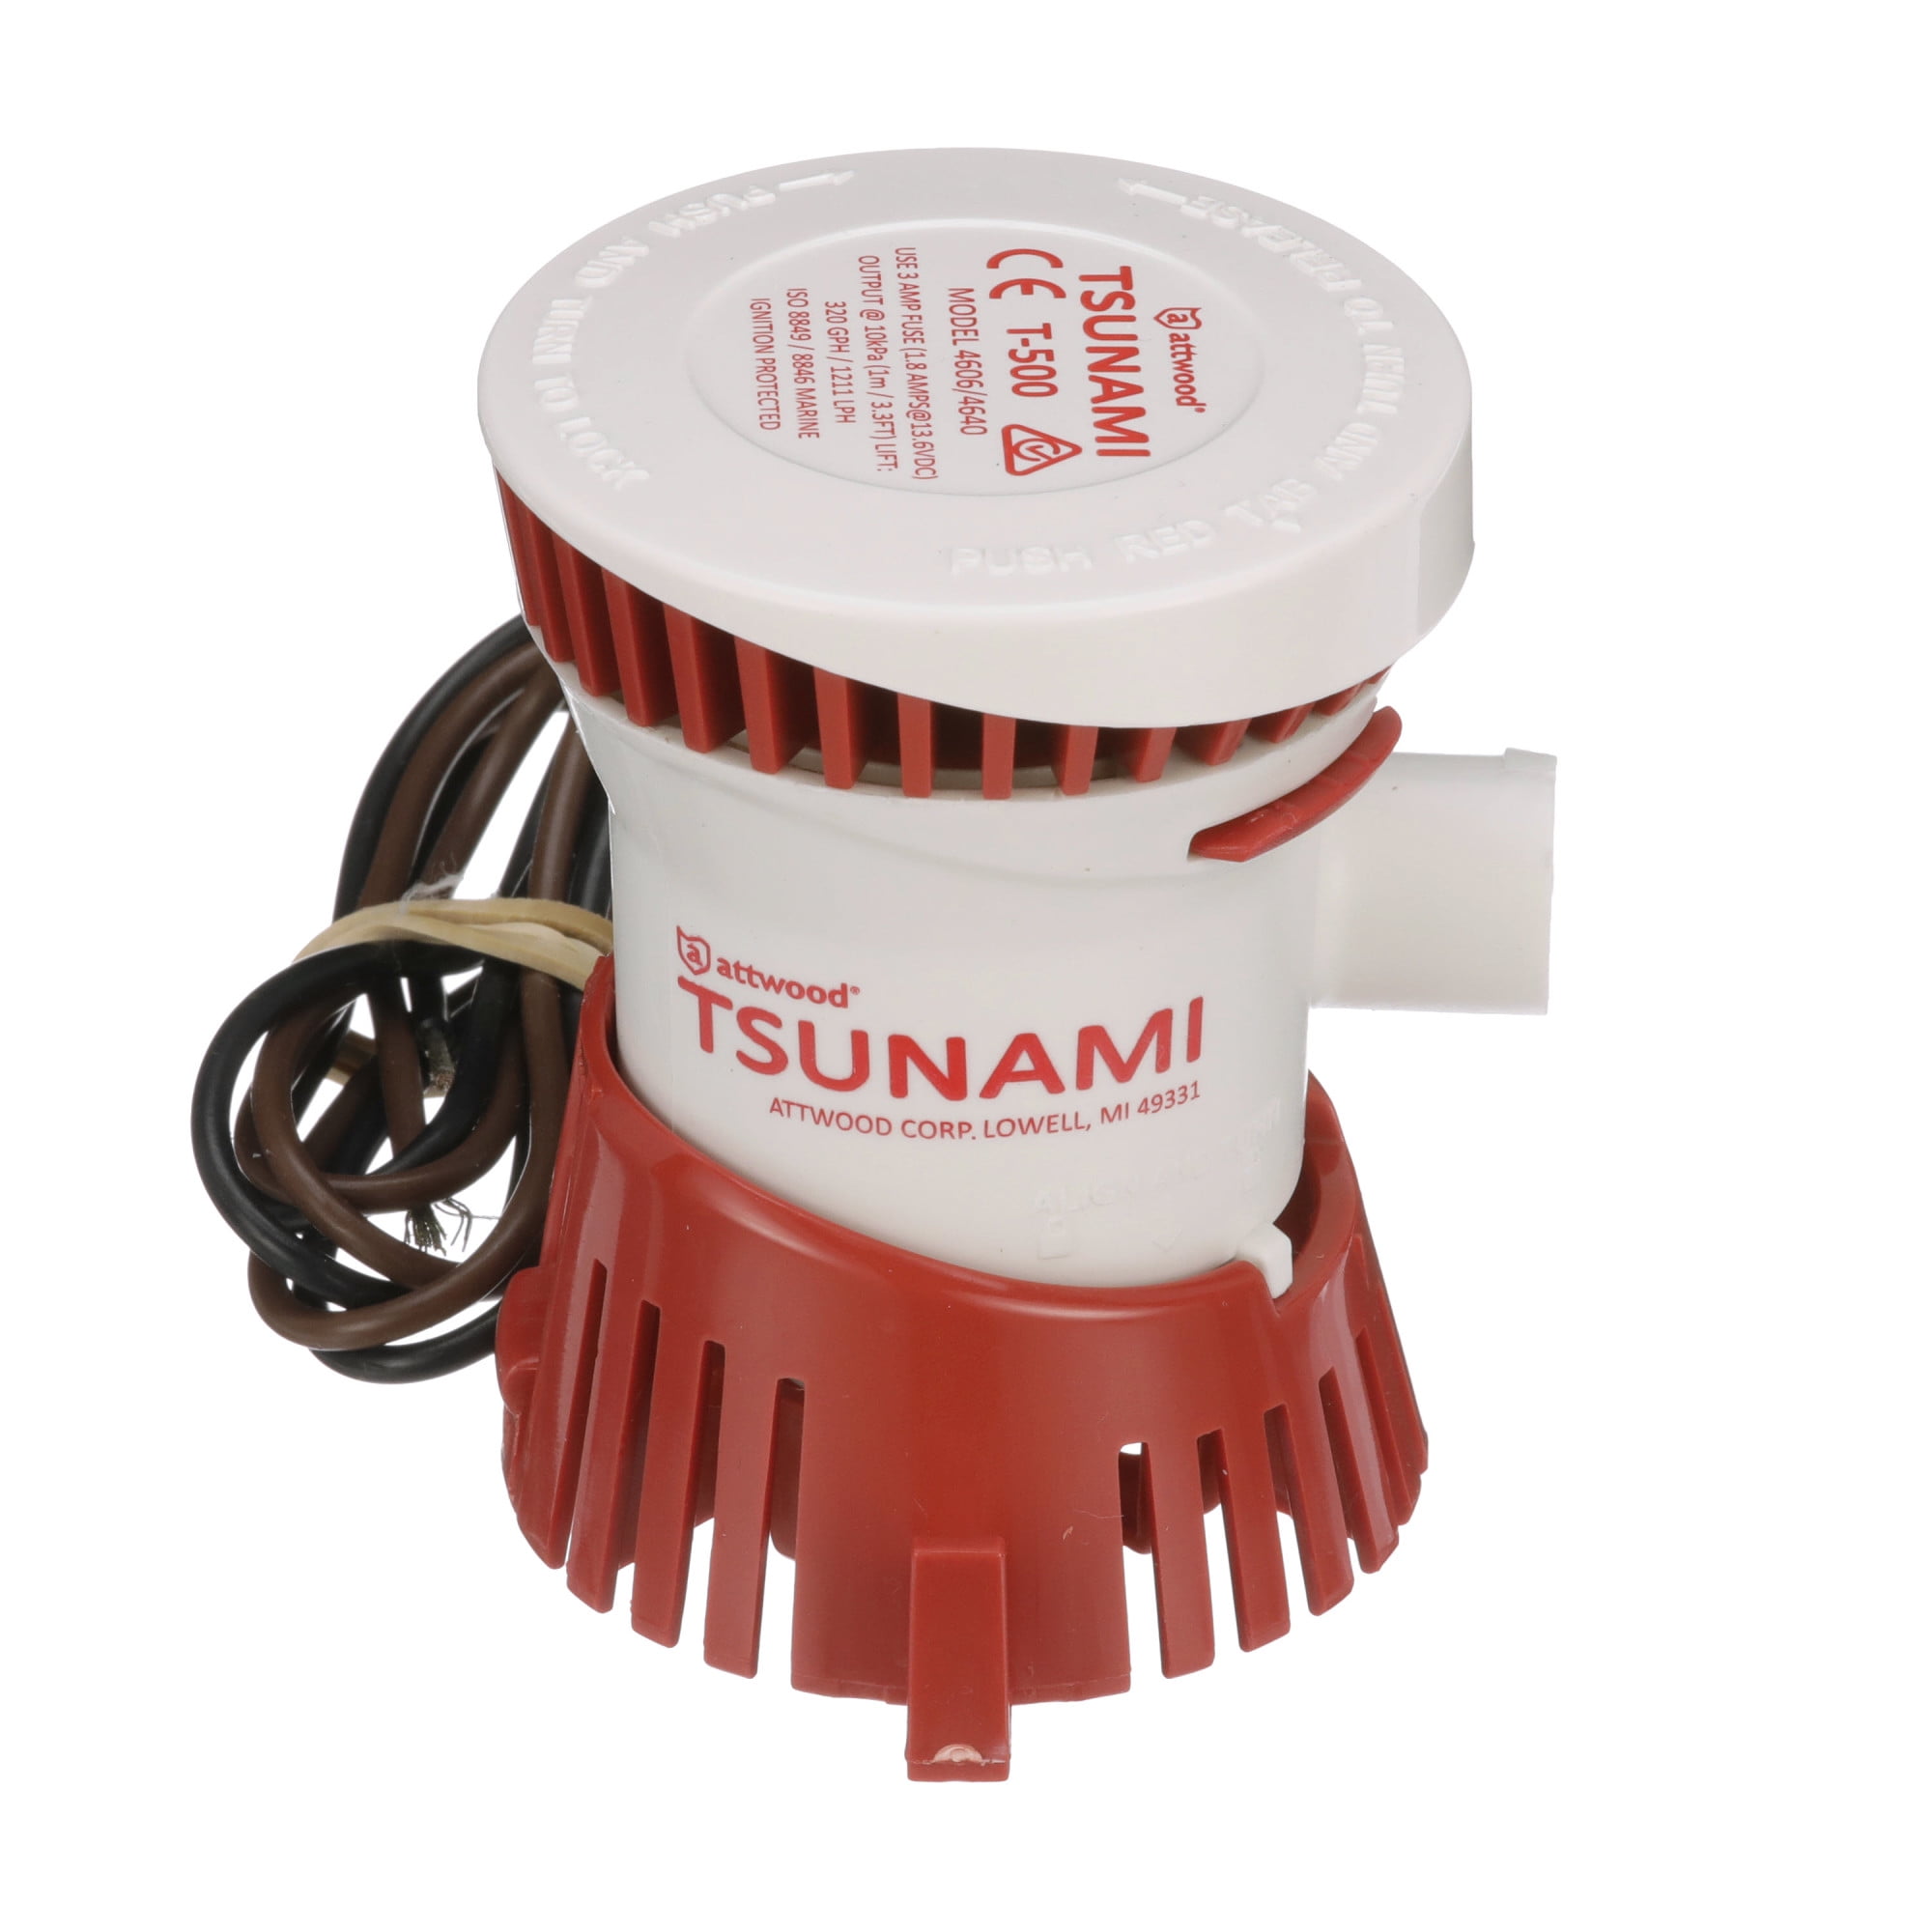 Attwood Tsunami T500 Bilge Pump 12v 500 GPH for sale online 